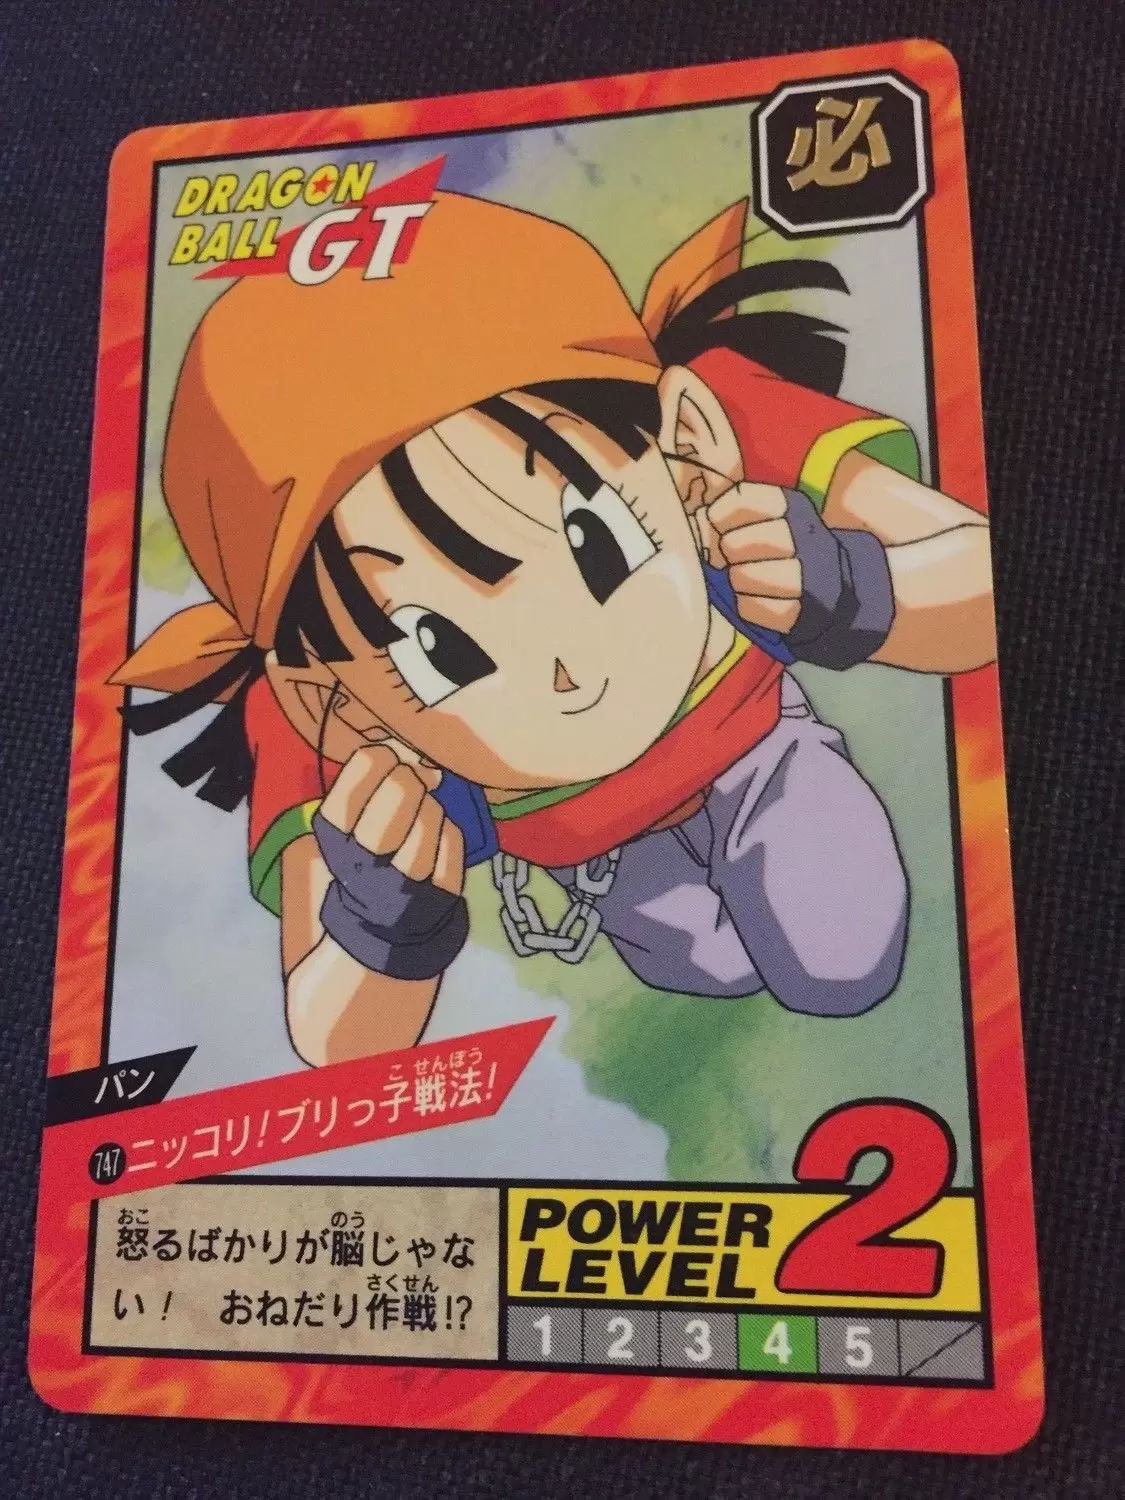 Power Level Part 17 - Dragon Ball Power Level Card #747